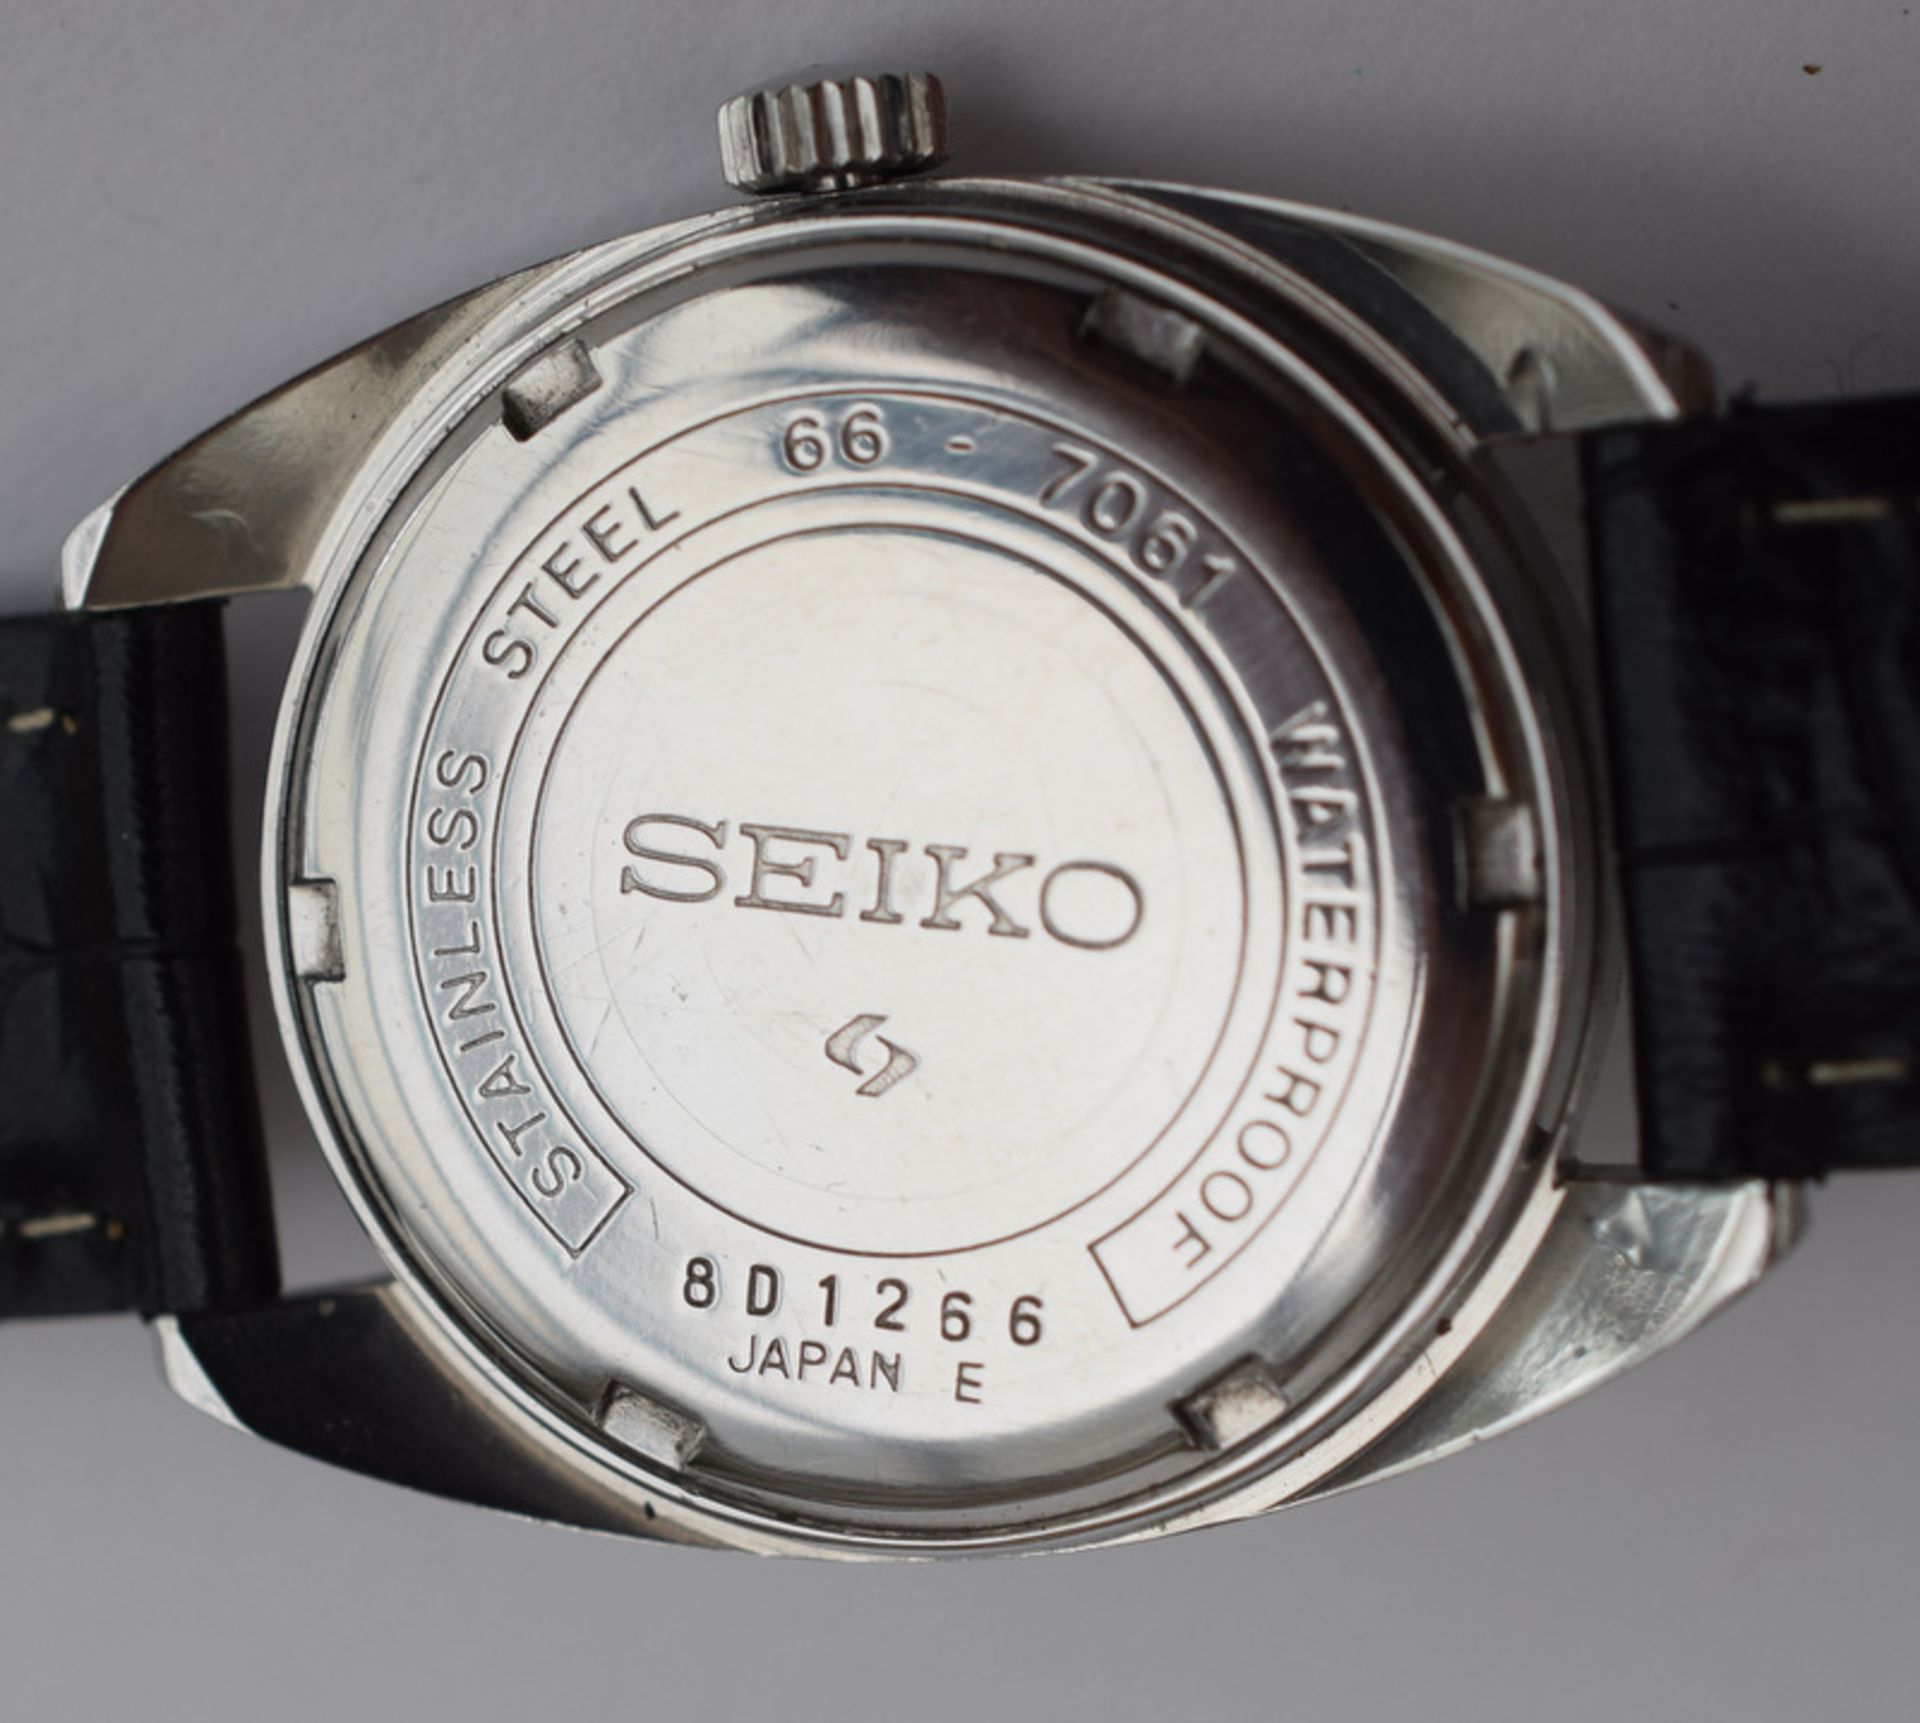 Vintage Seiko 7061 Black Dial Watch - Image 4 of 4